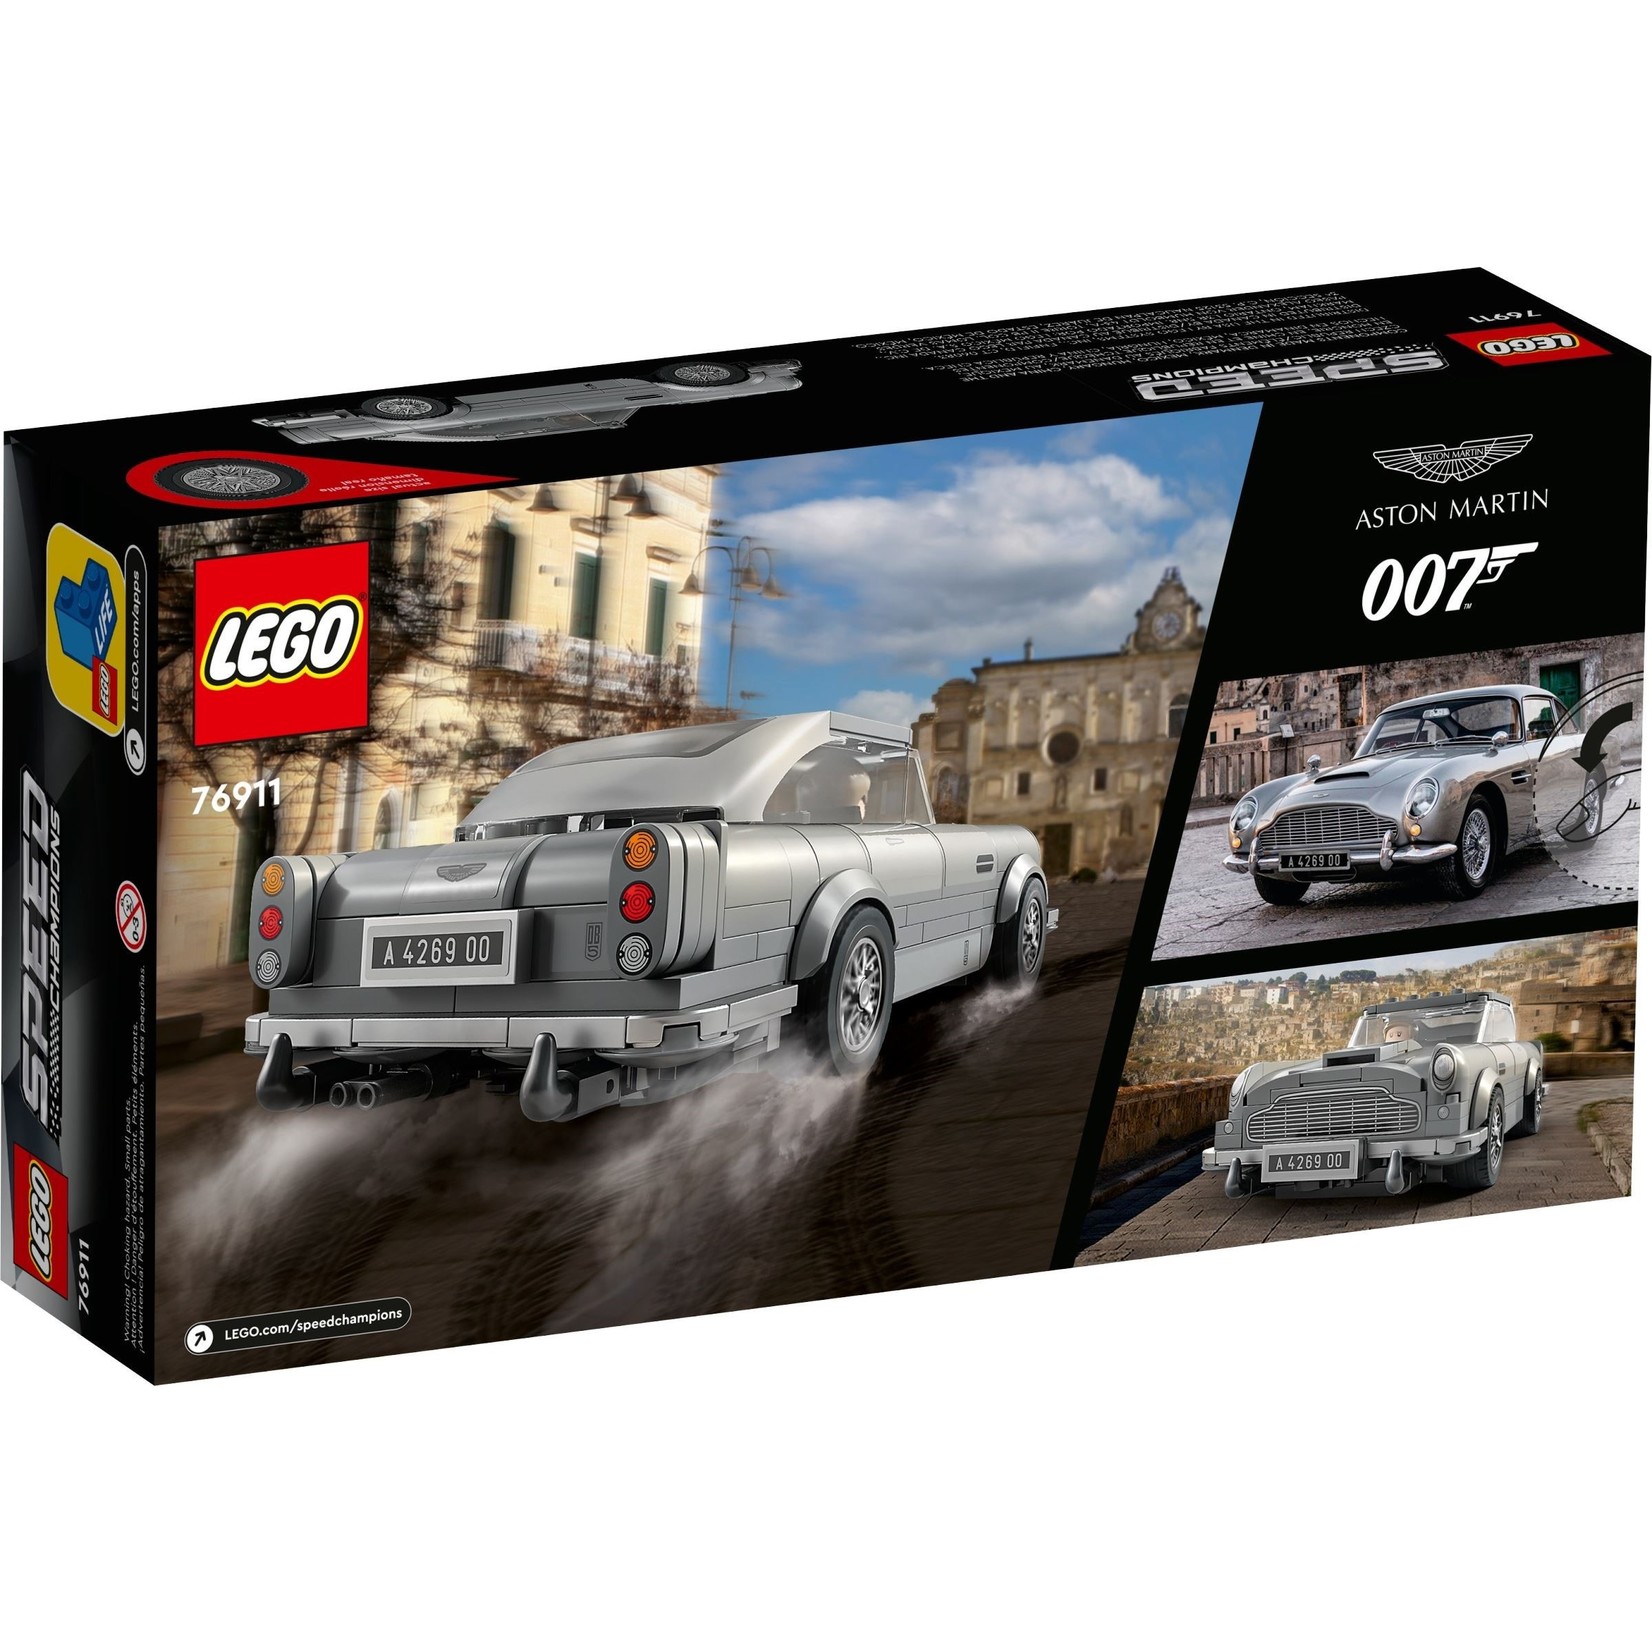 LEGO 007 Aston  Martin DB5 - 76911